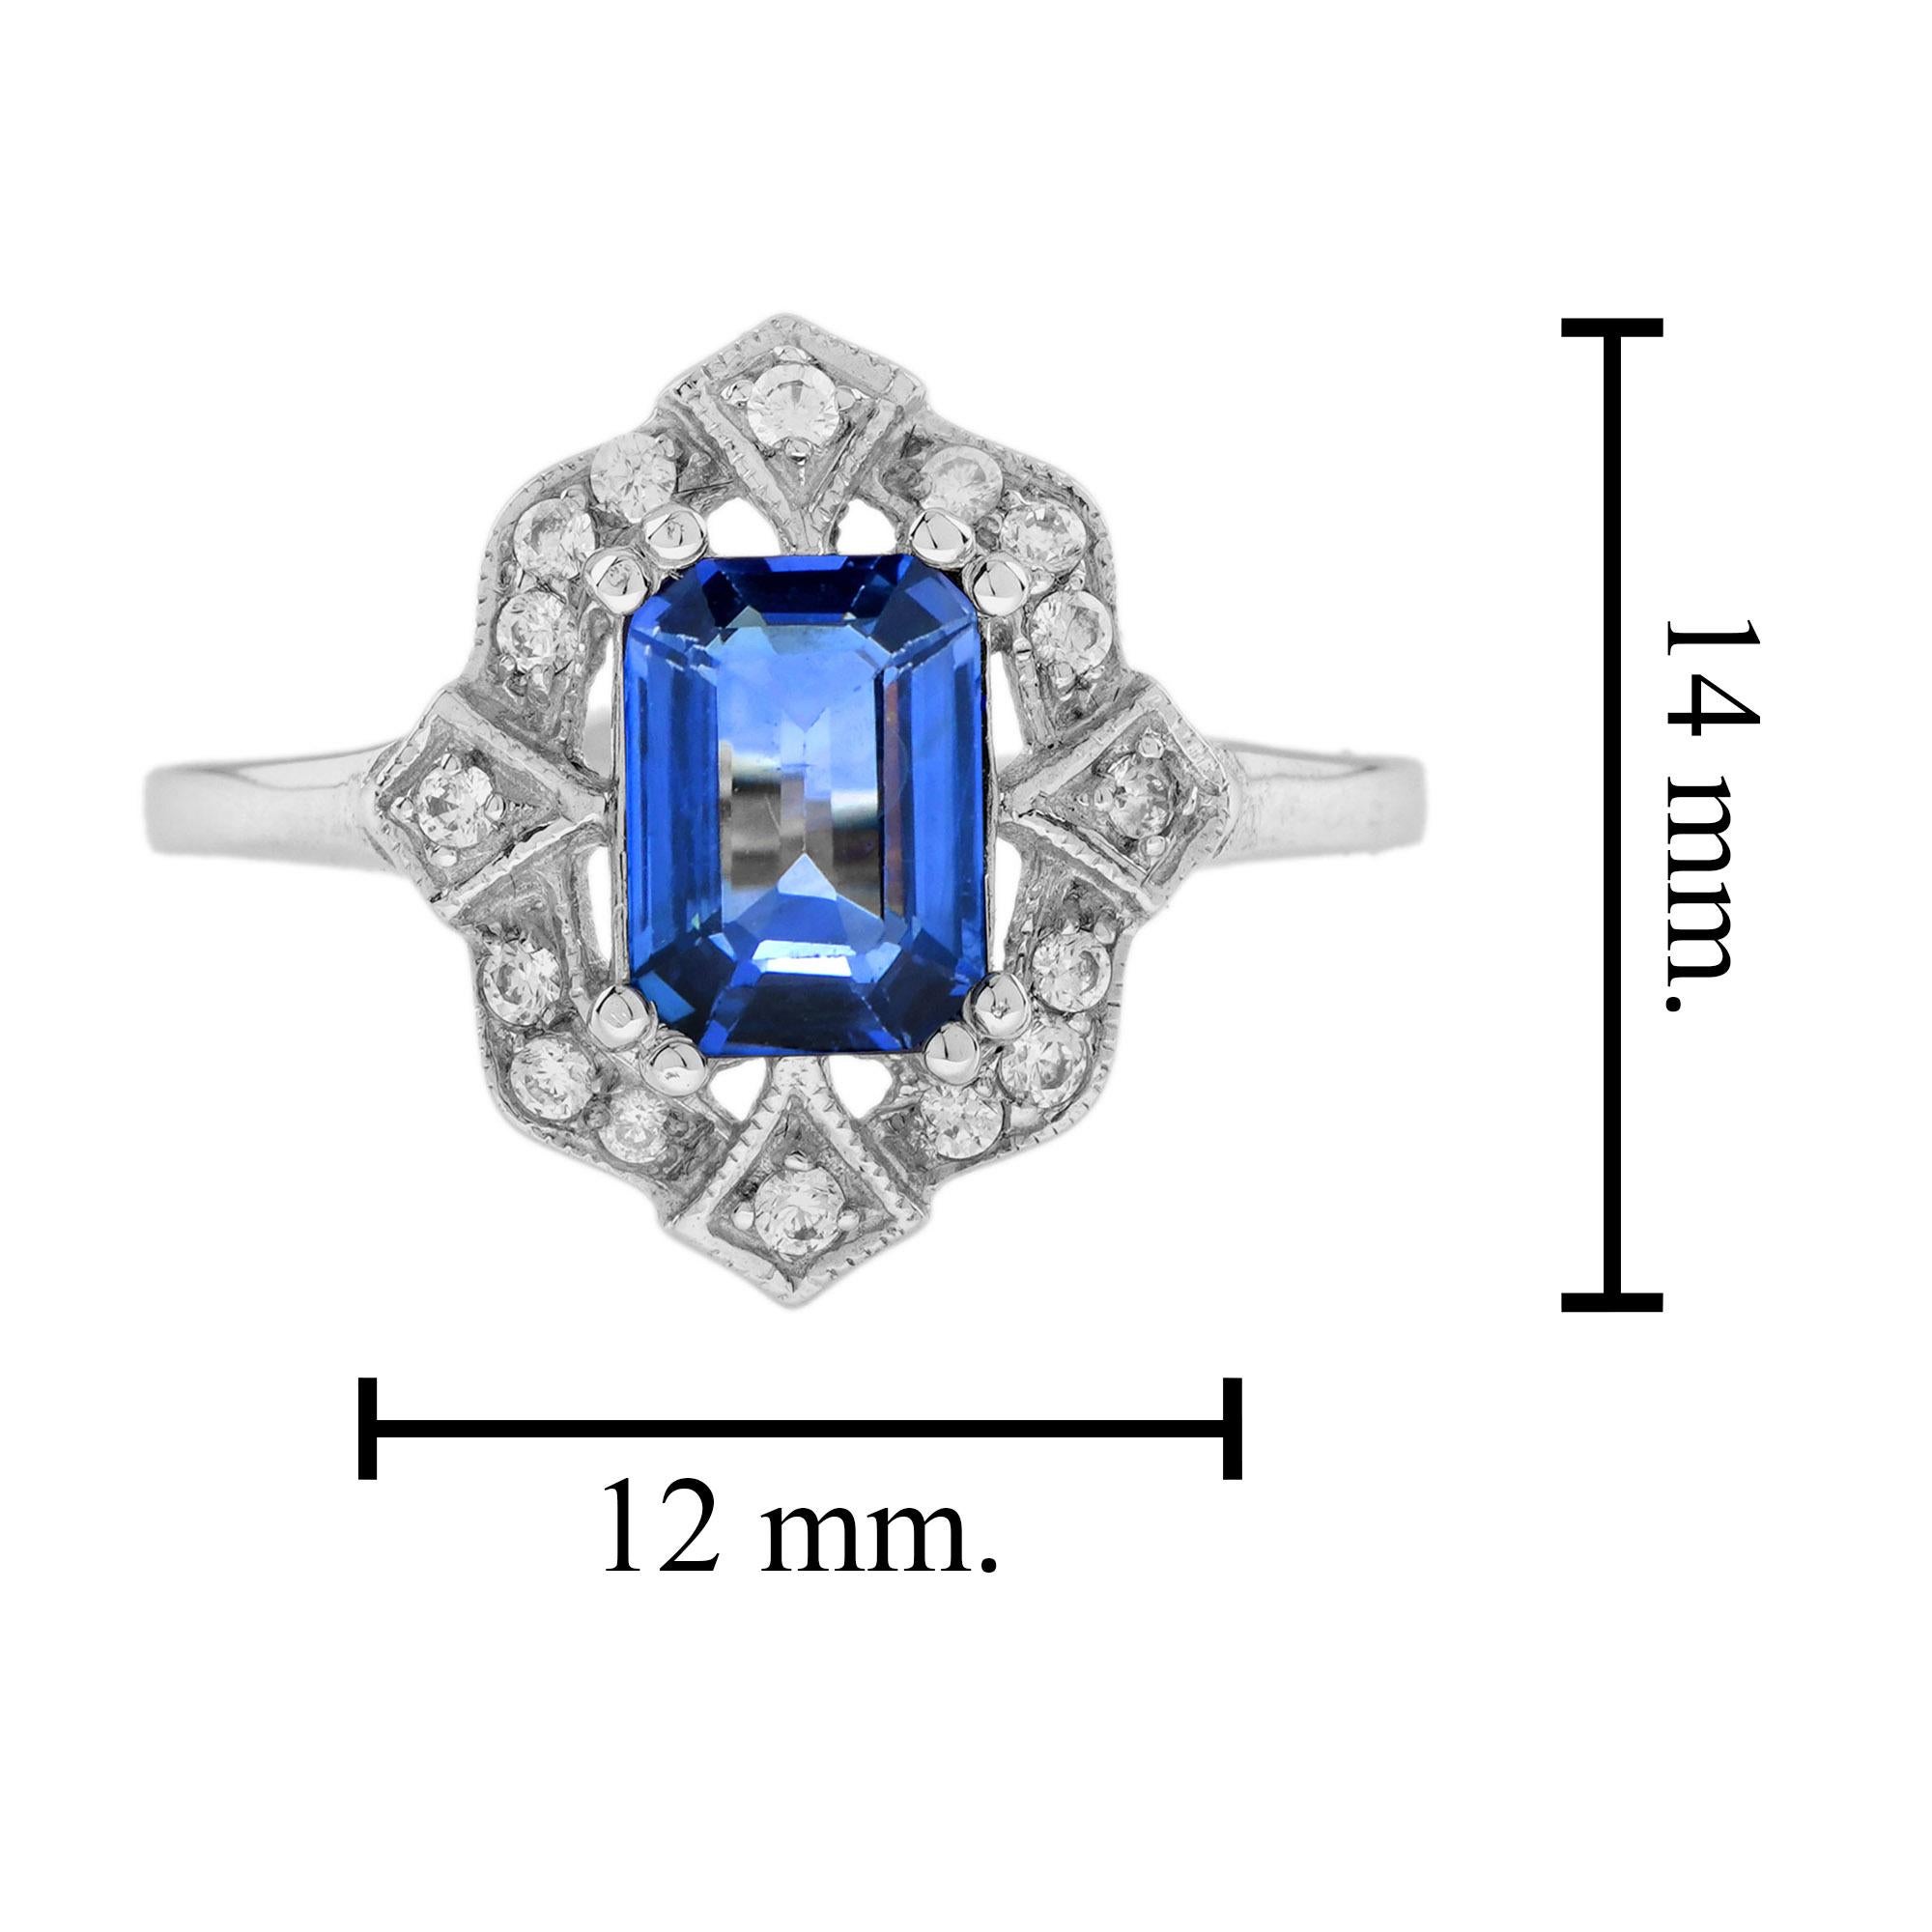 For Sale:  Emerald Cut Ceylon Sapphire and Diamond Halo Ring in 18K White Gold 7